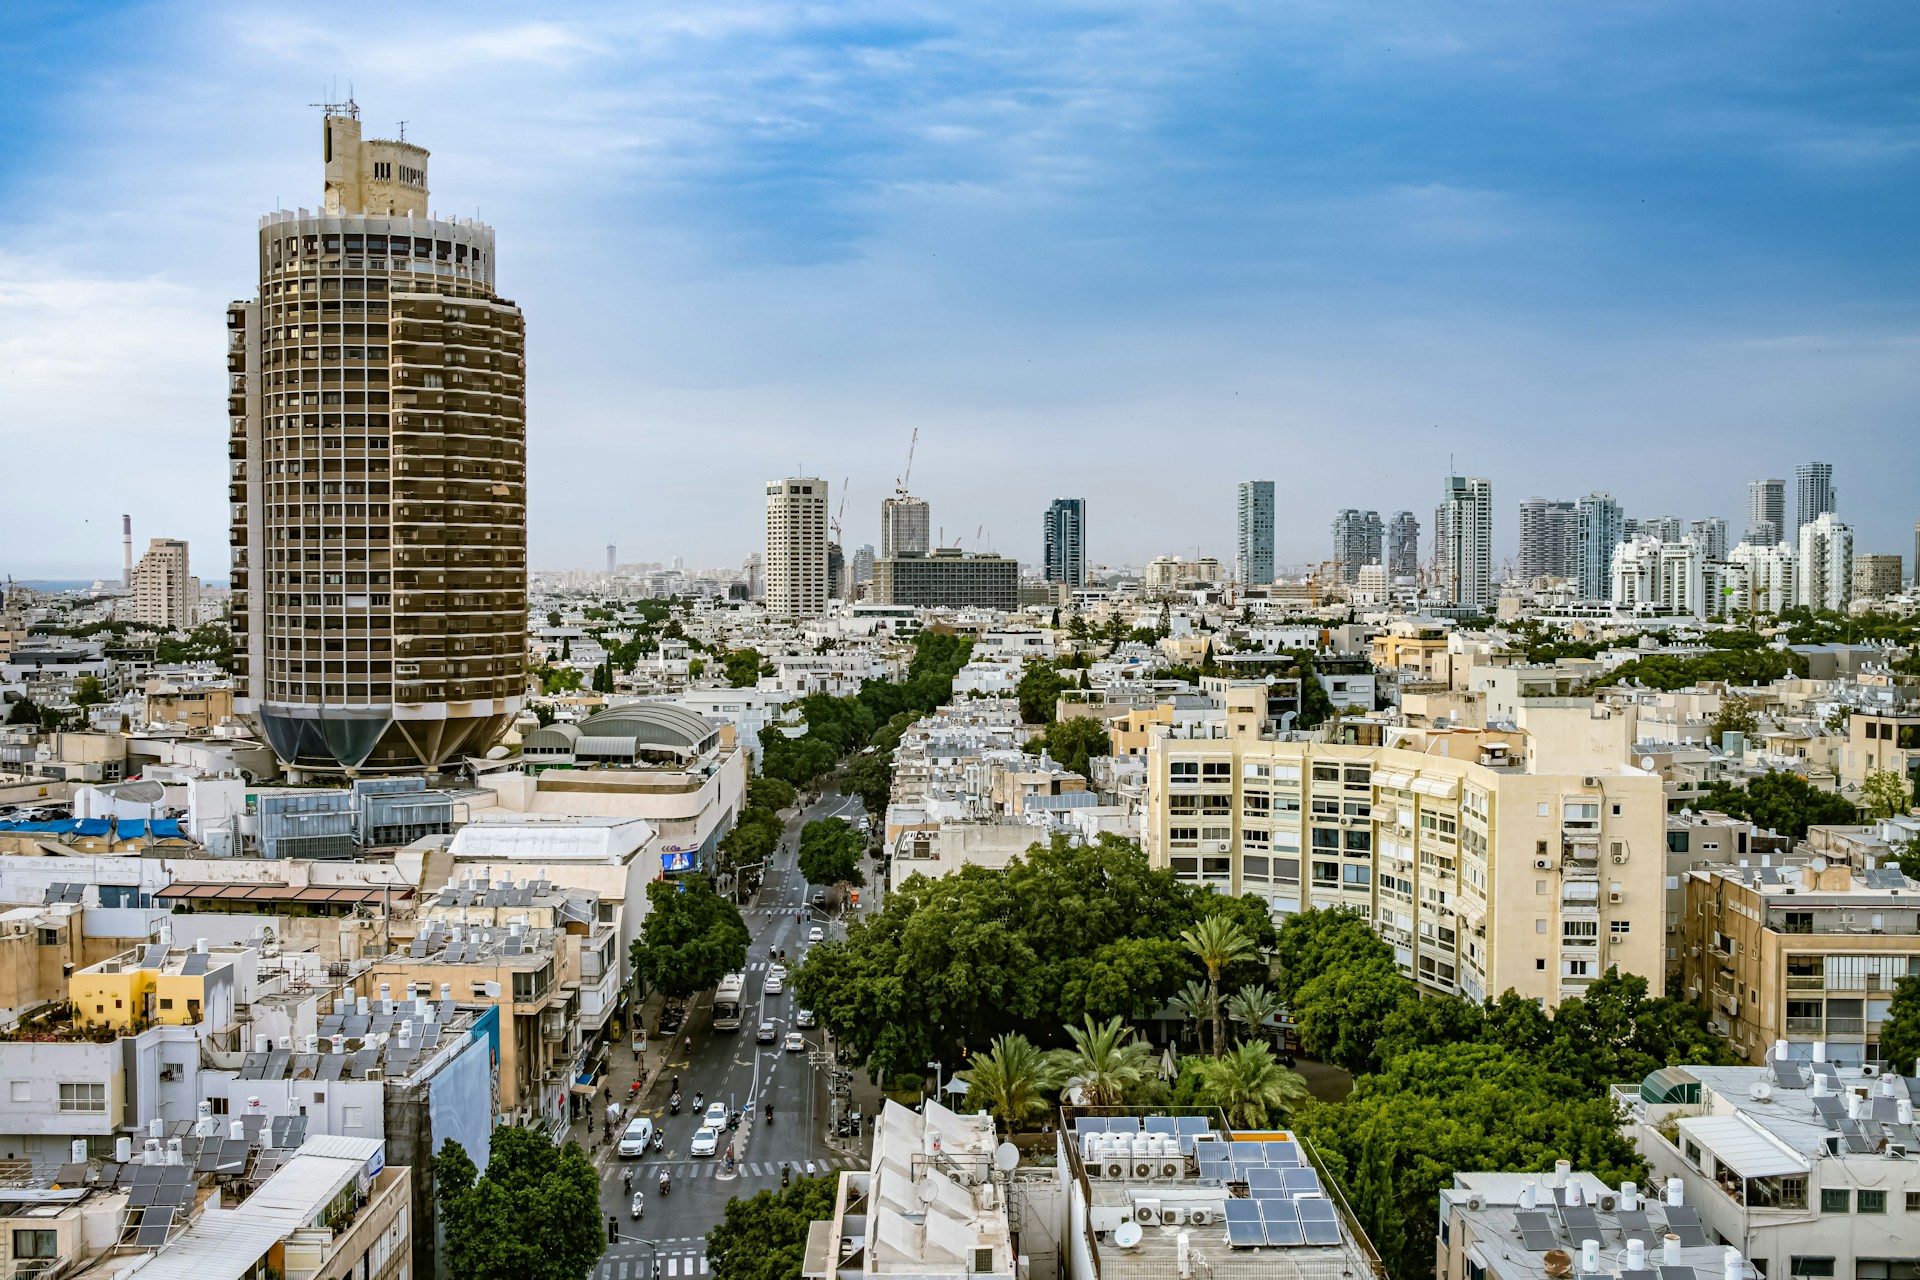 Aerial view of Tel Aviv